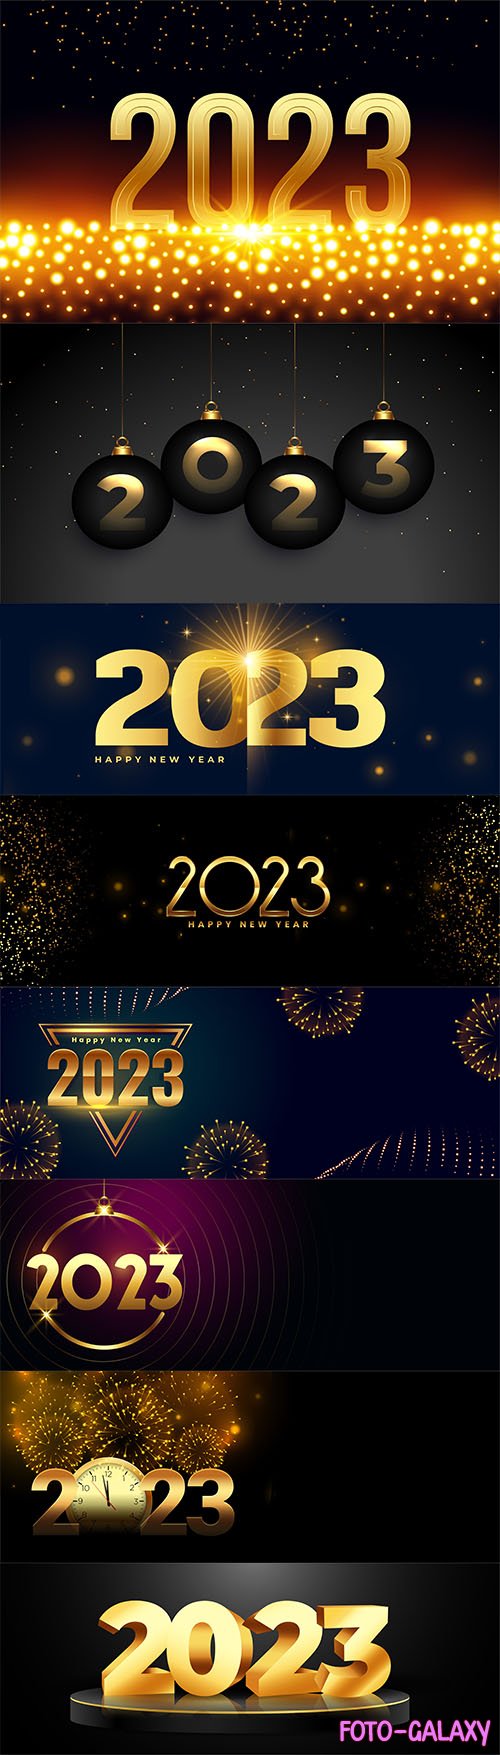 Elegant new year 2023 shiny background with light effect